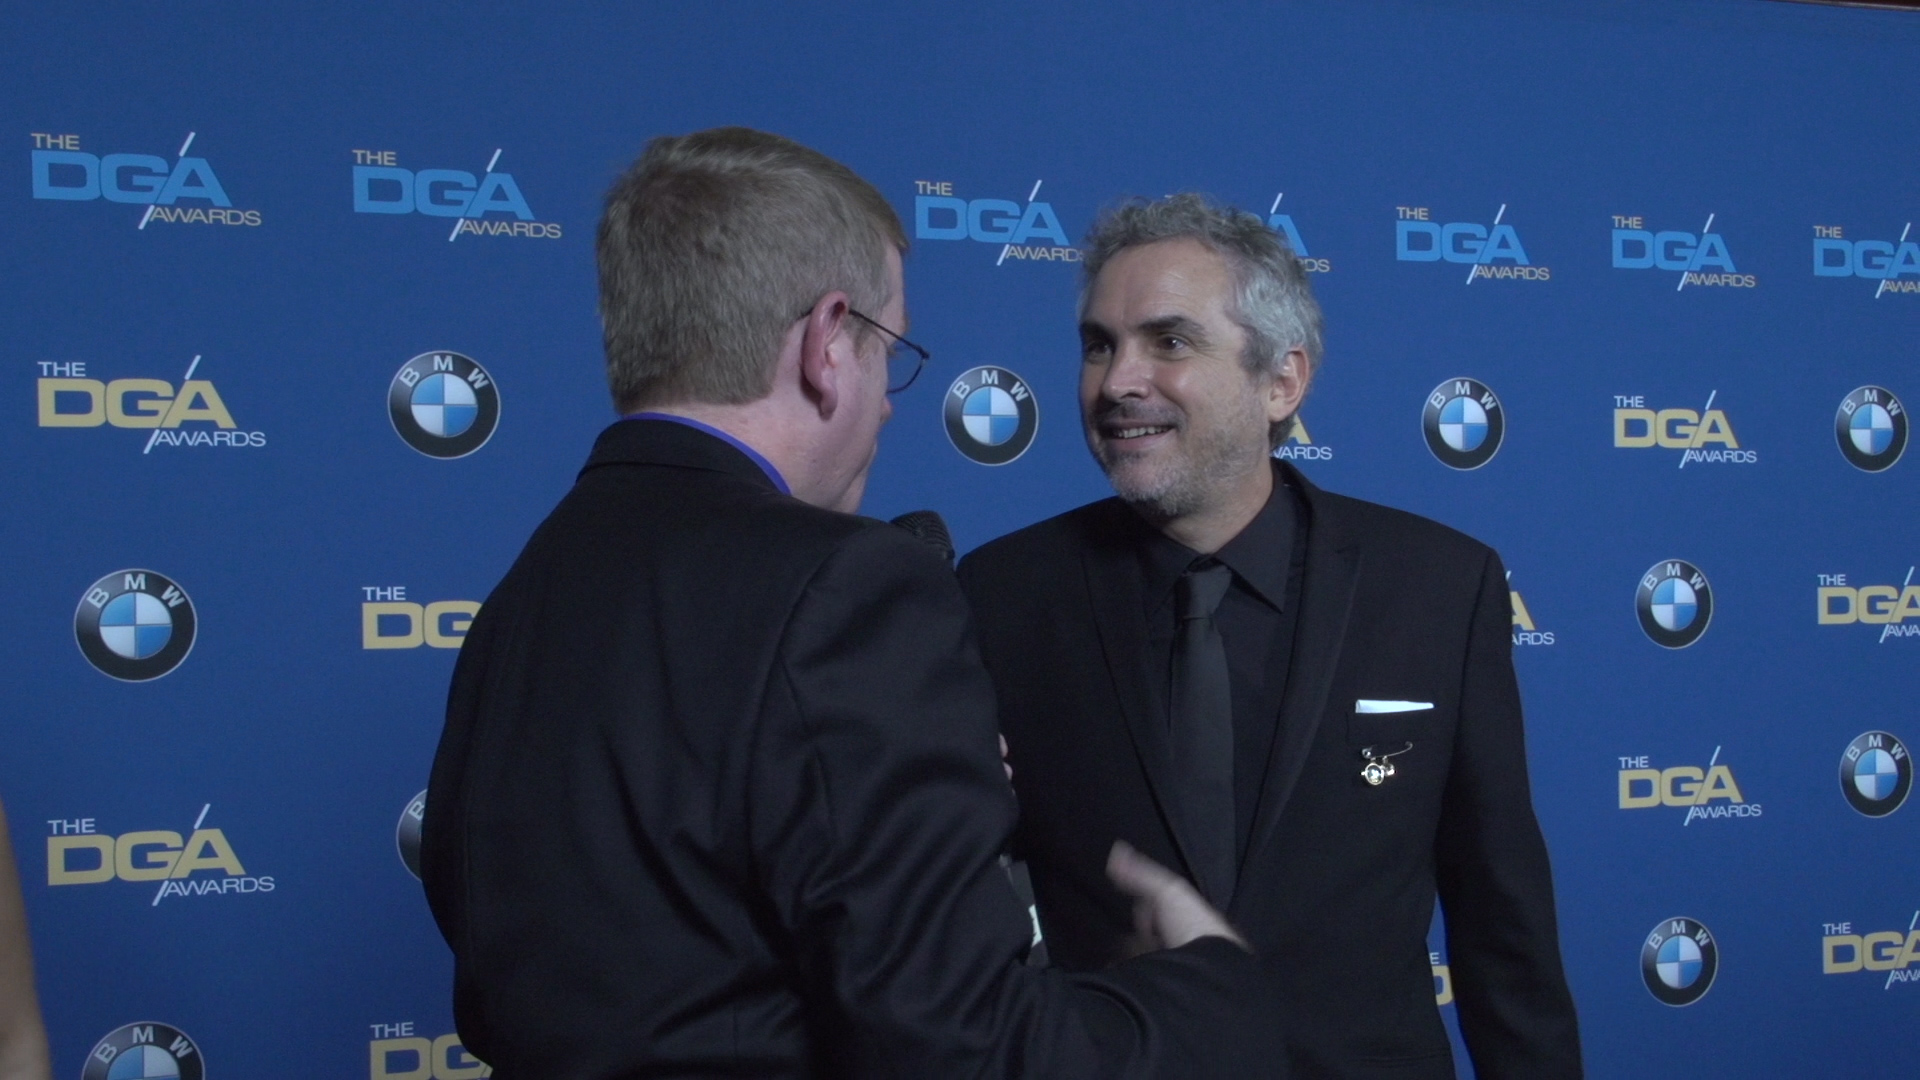 Matt Ryan interviewing Alfonso Cuaron